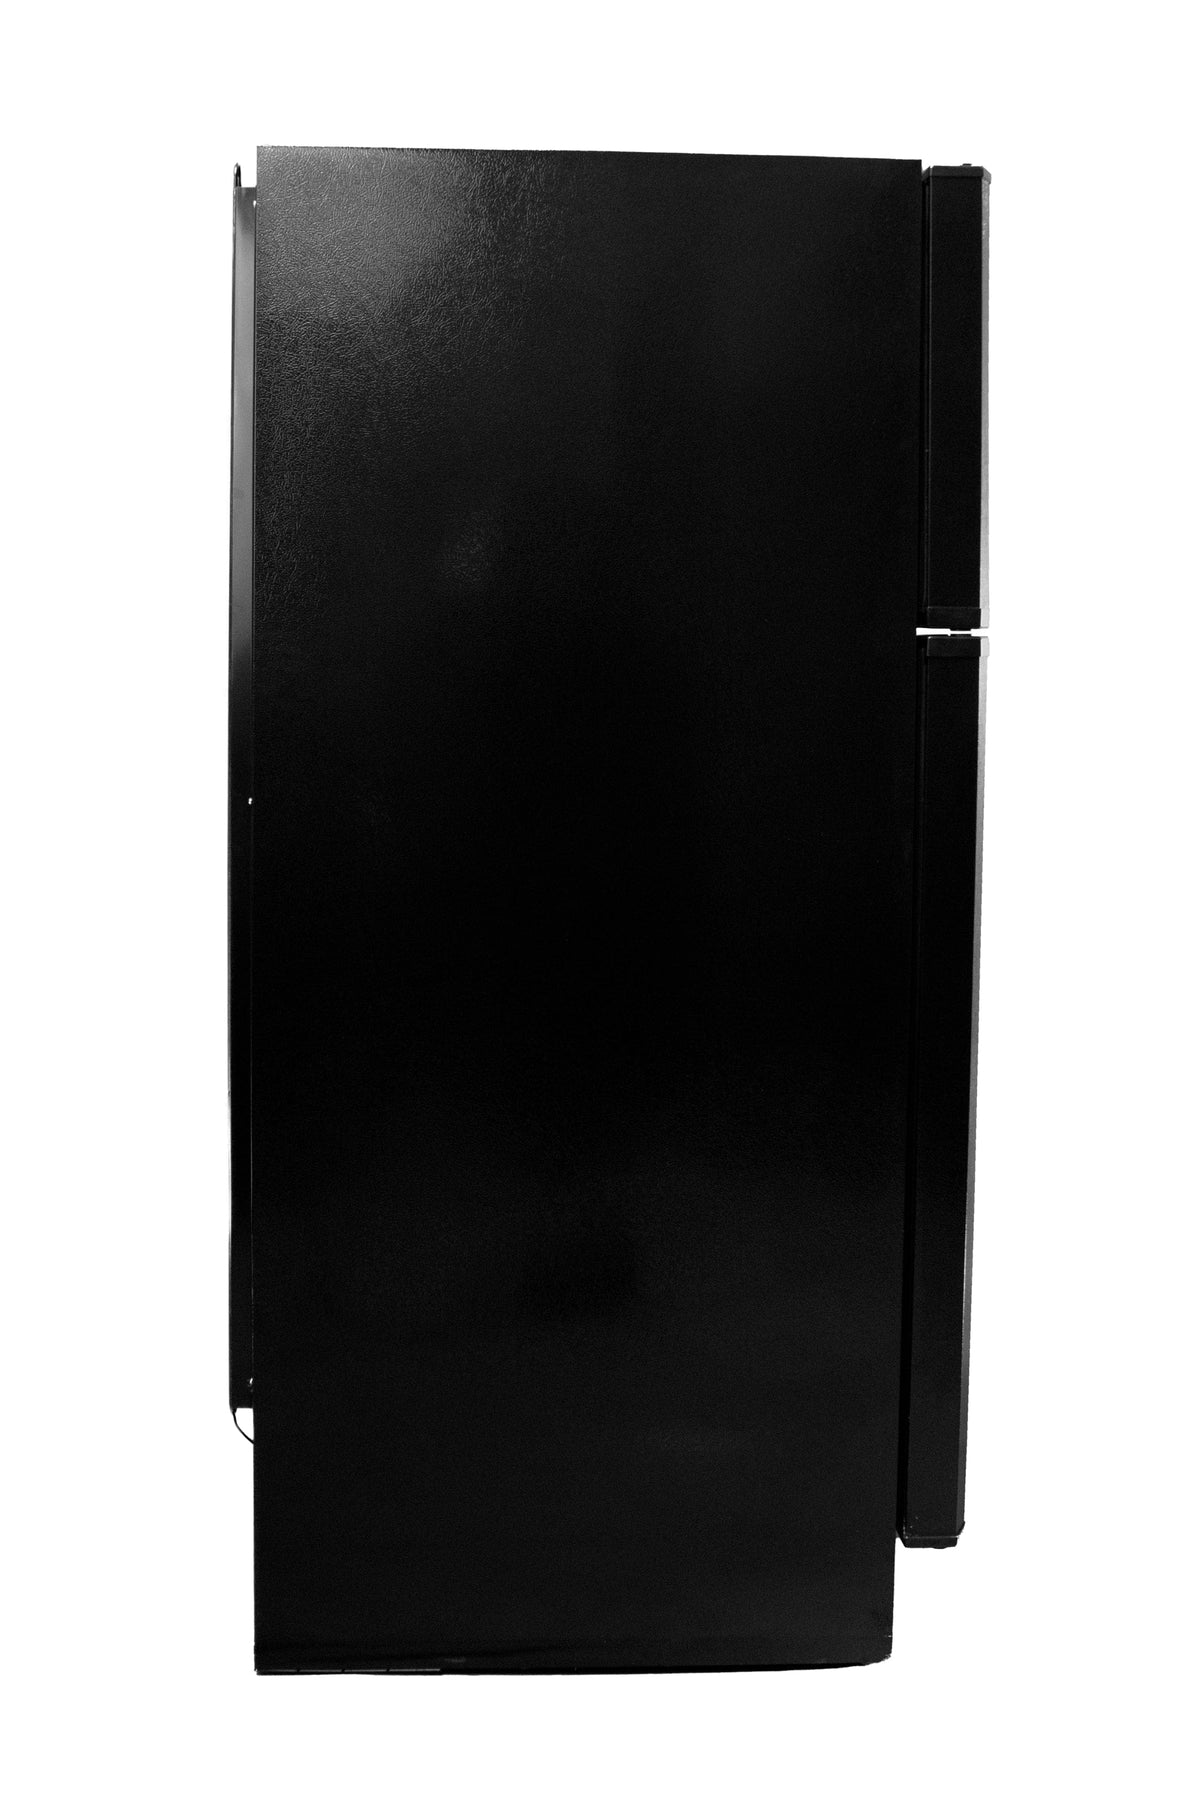 SunStar/SolarFreeze Solar Appliances Sunstar ST-16RFB 16 cu. ft. Low Voltage Solar DC Powered Refrigerator-Freezer in Black